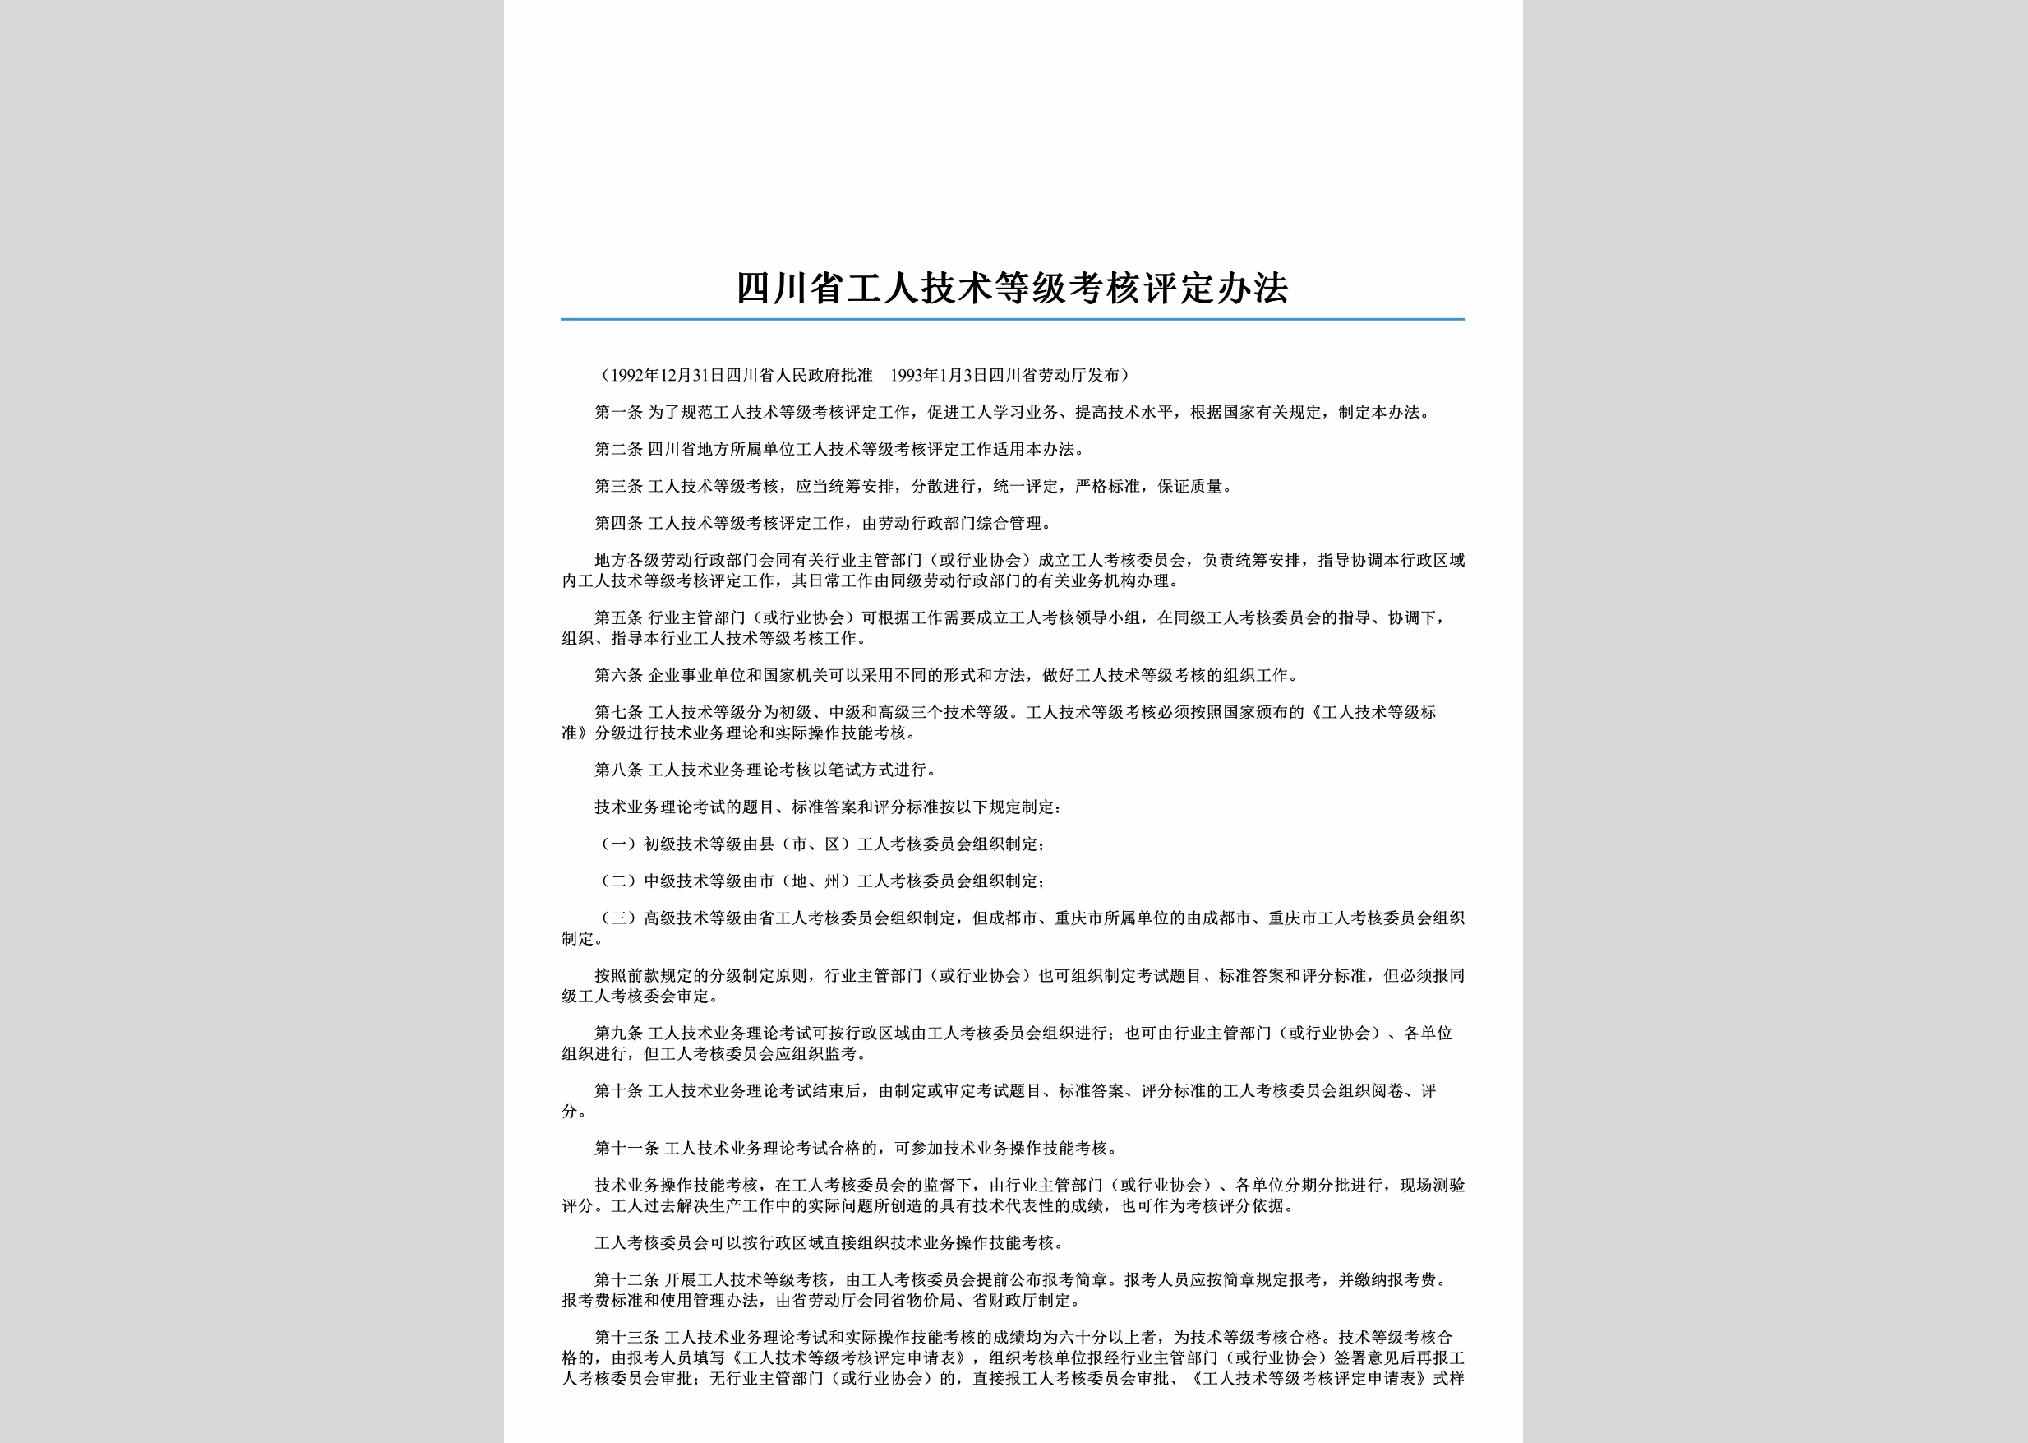 SC-JSDJKHPD-2006：四川省工人技术等级考核评定办法